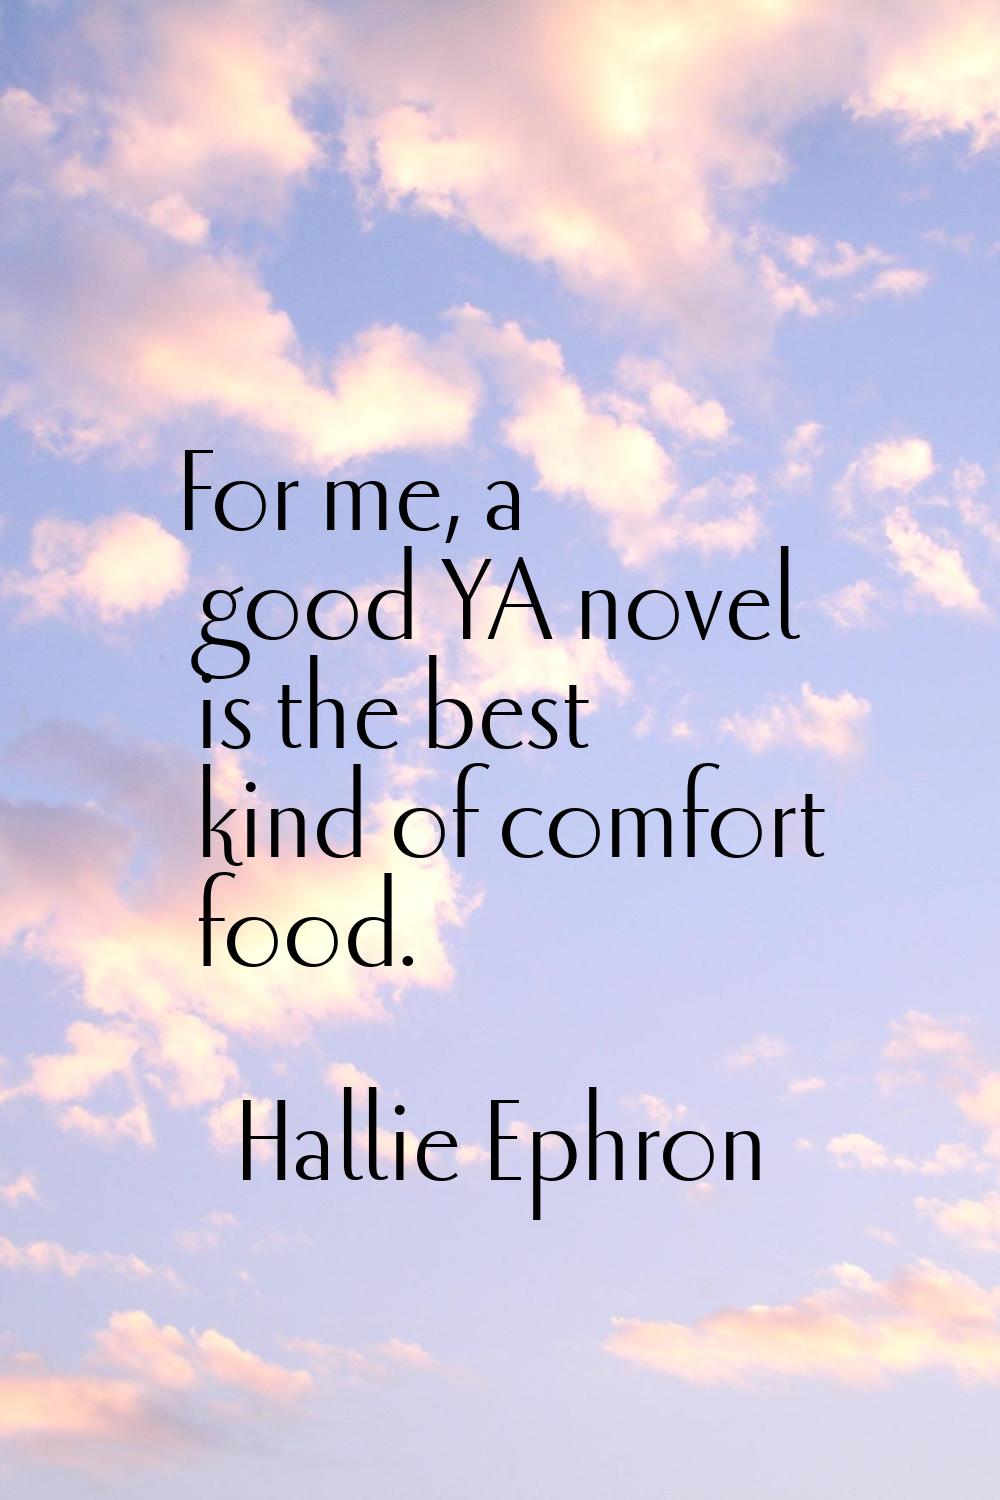 For me, a good YA novel is the best kind of comfort food.